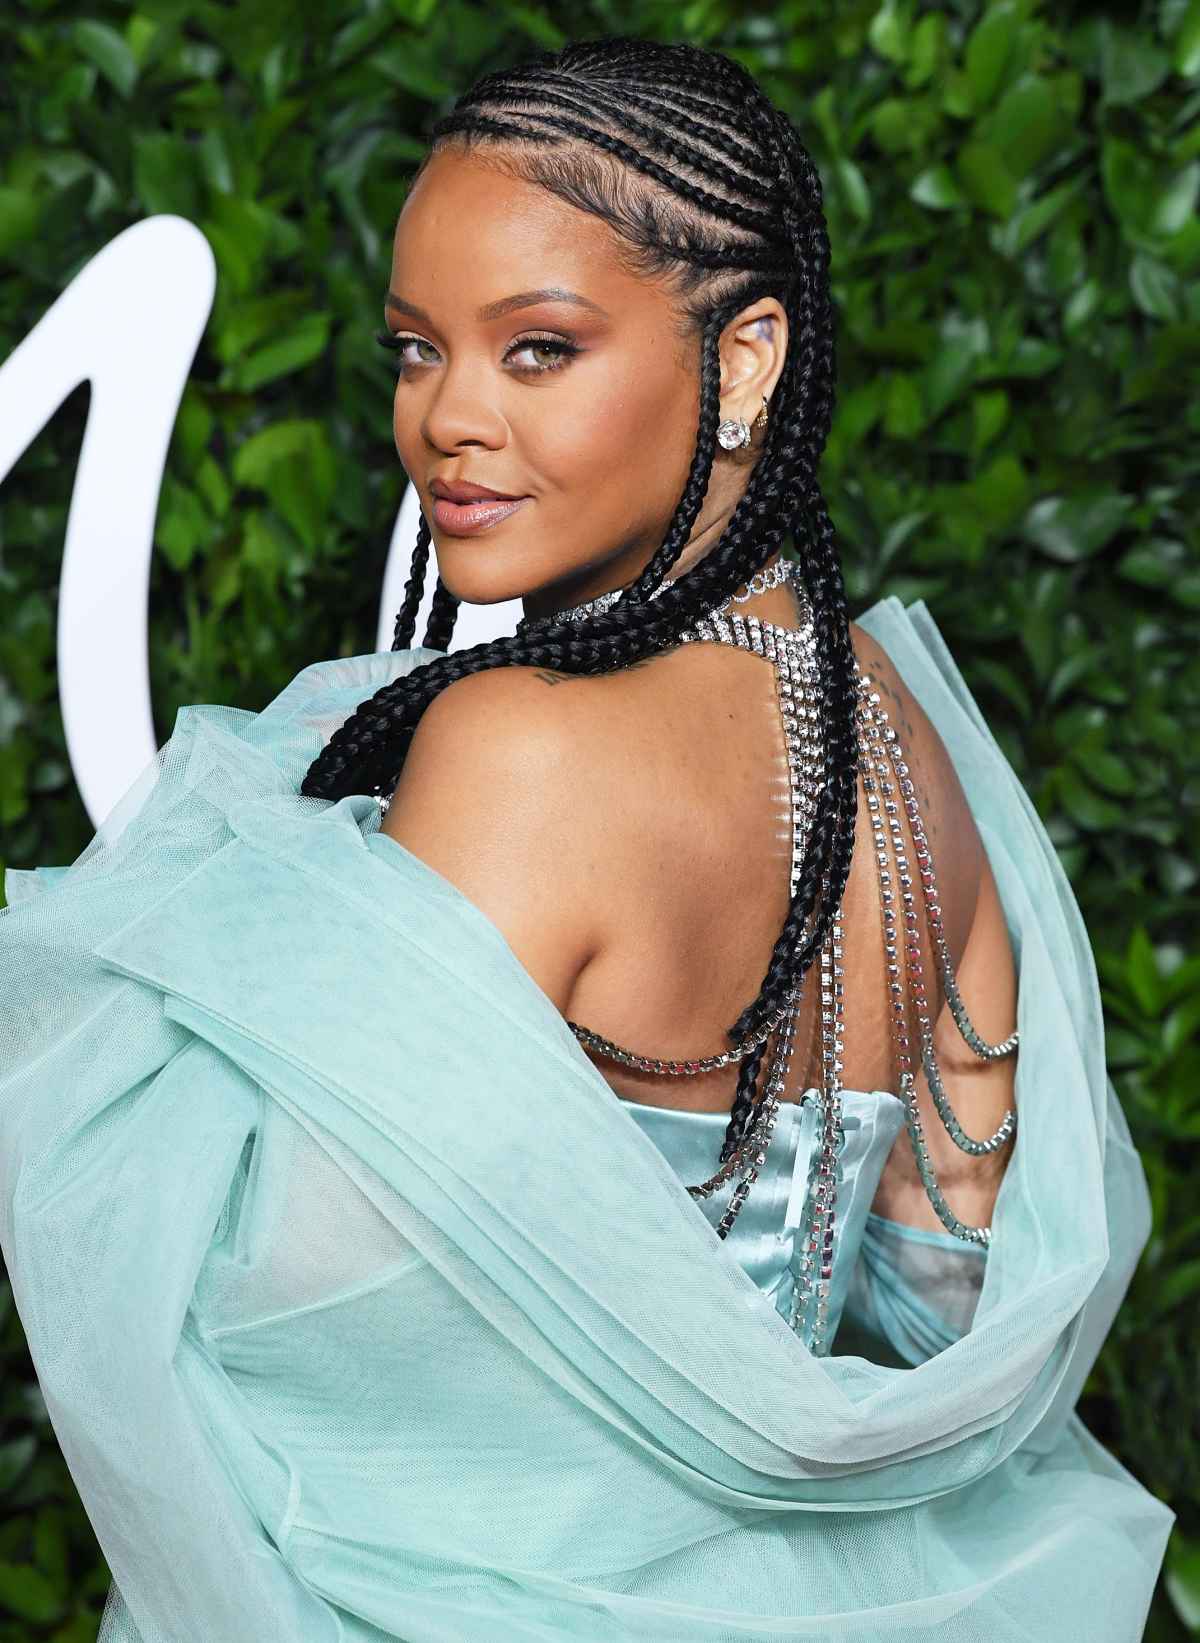 Rihanna's Fenty brand nominated for 2019 British Fashion Award